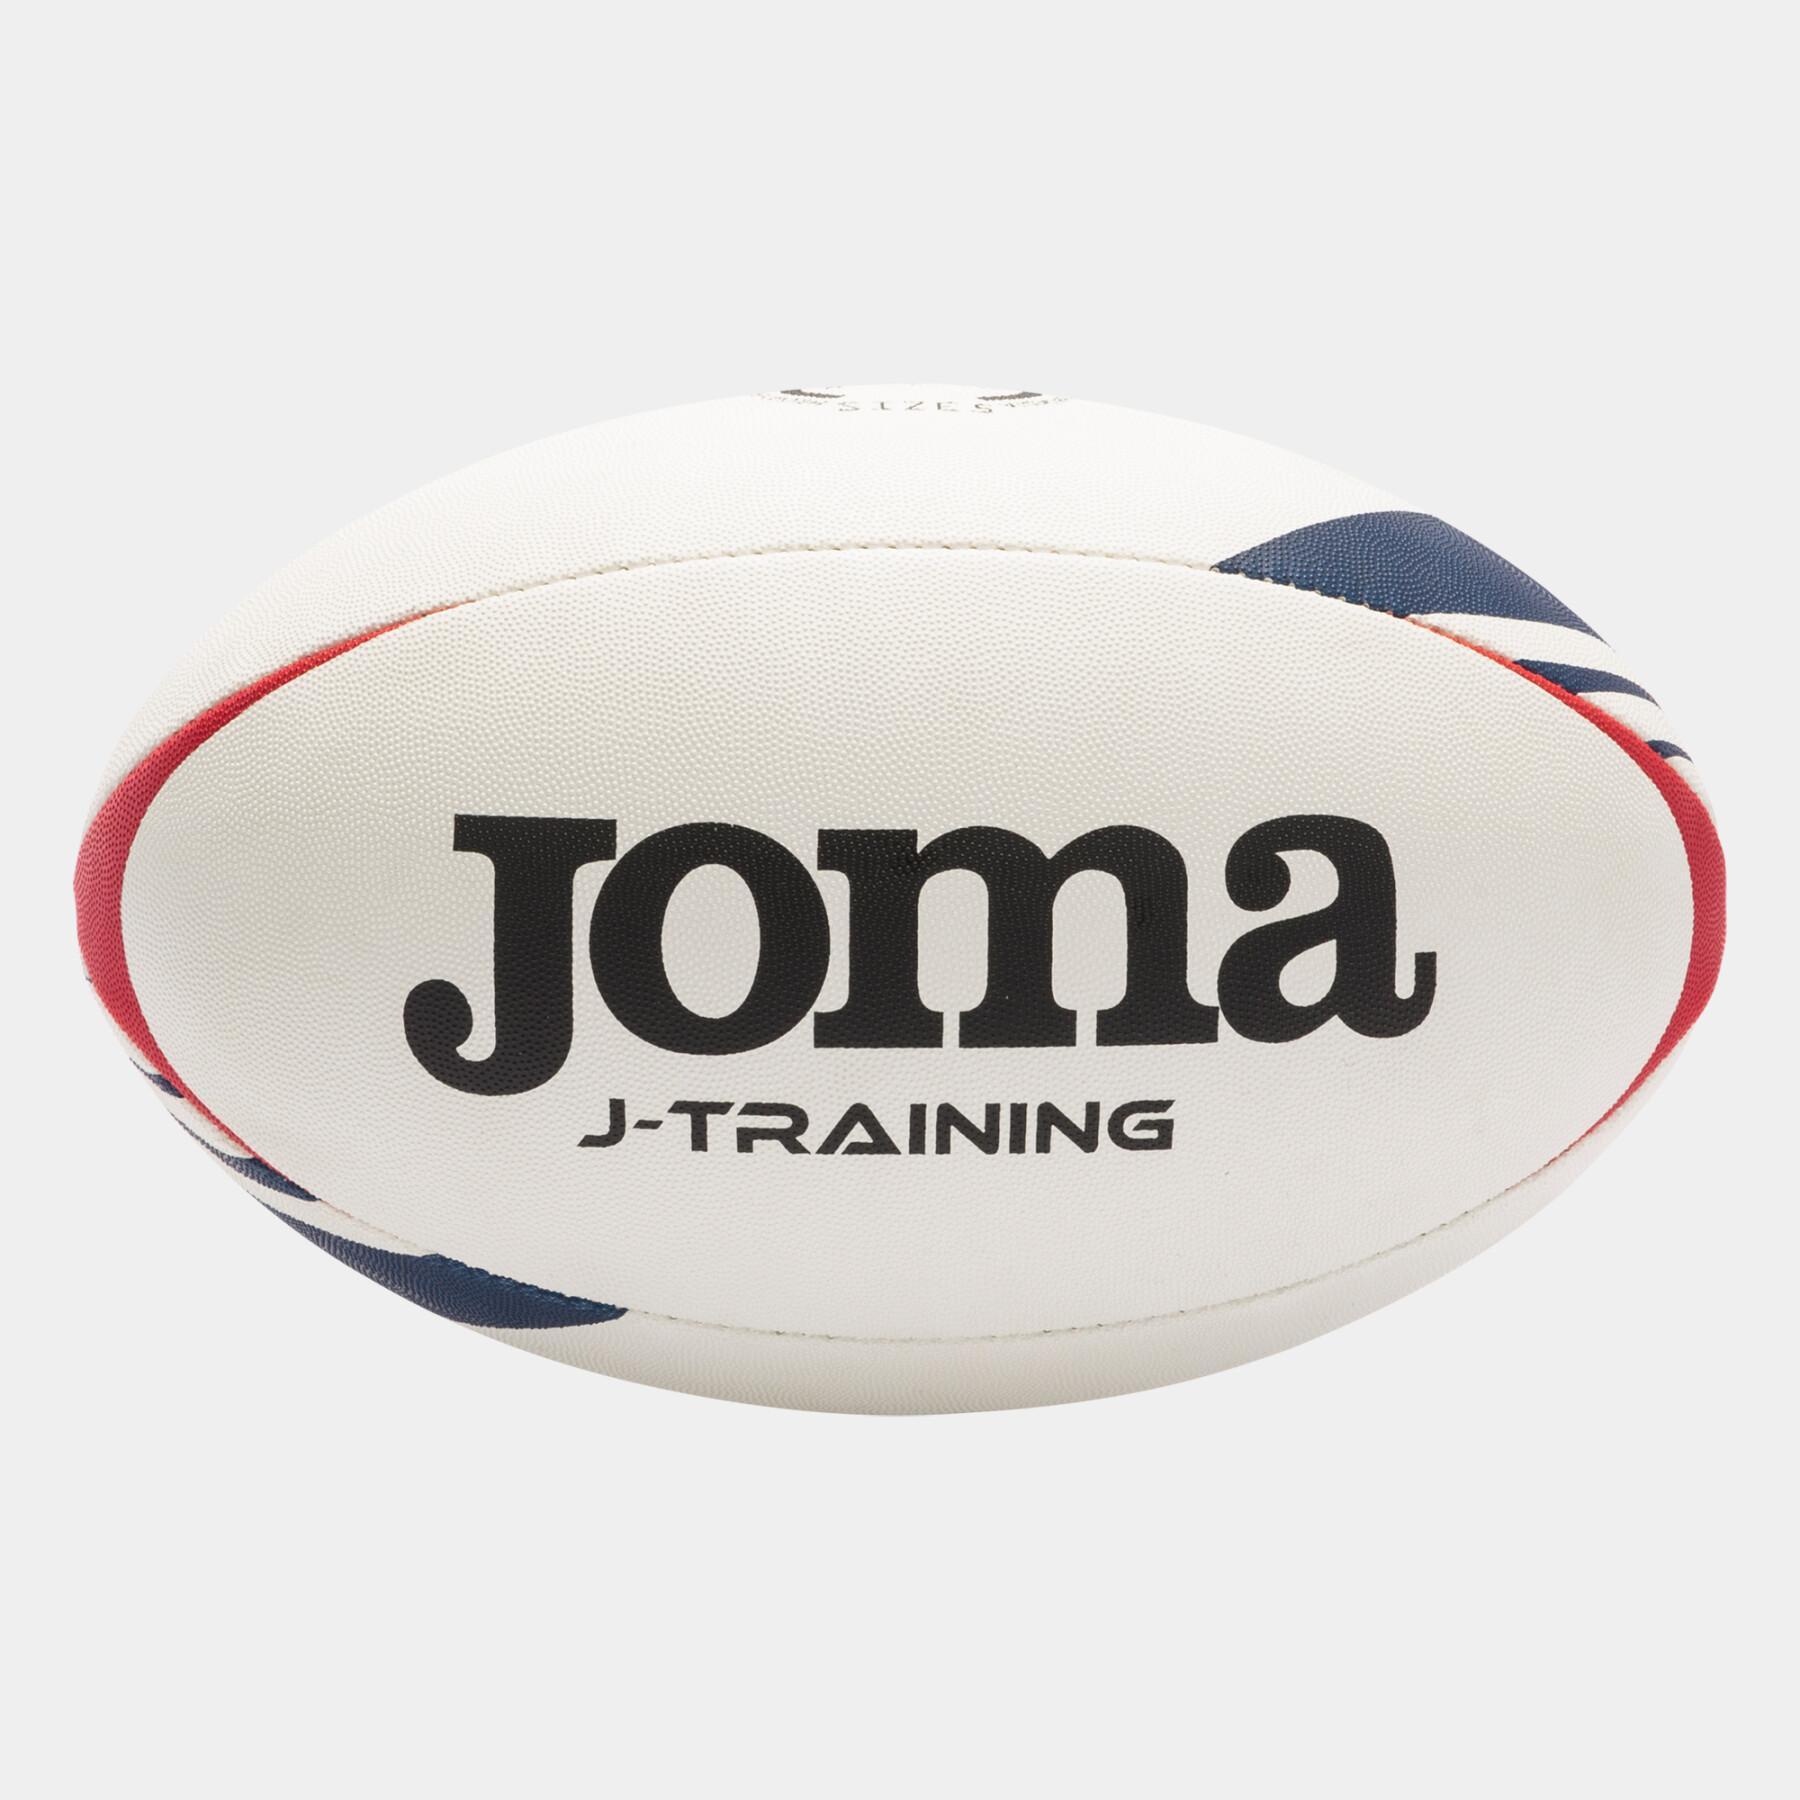 Rugby ball Joma J-Training